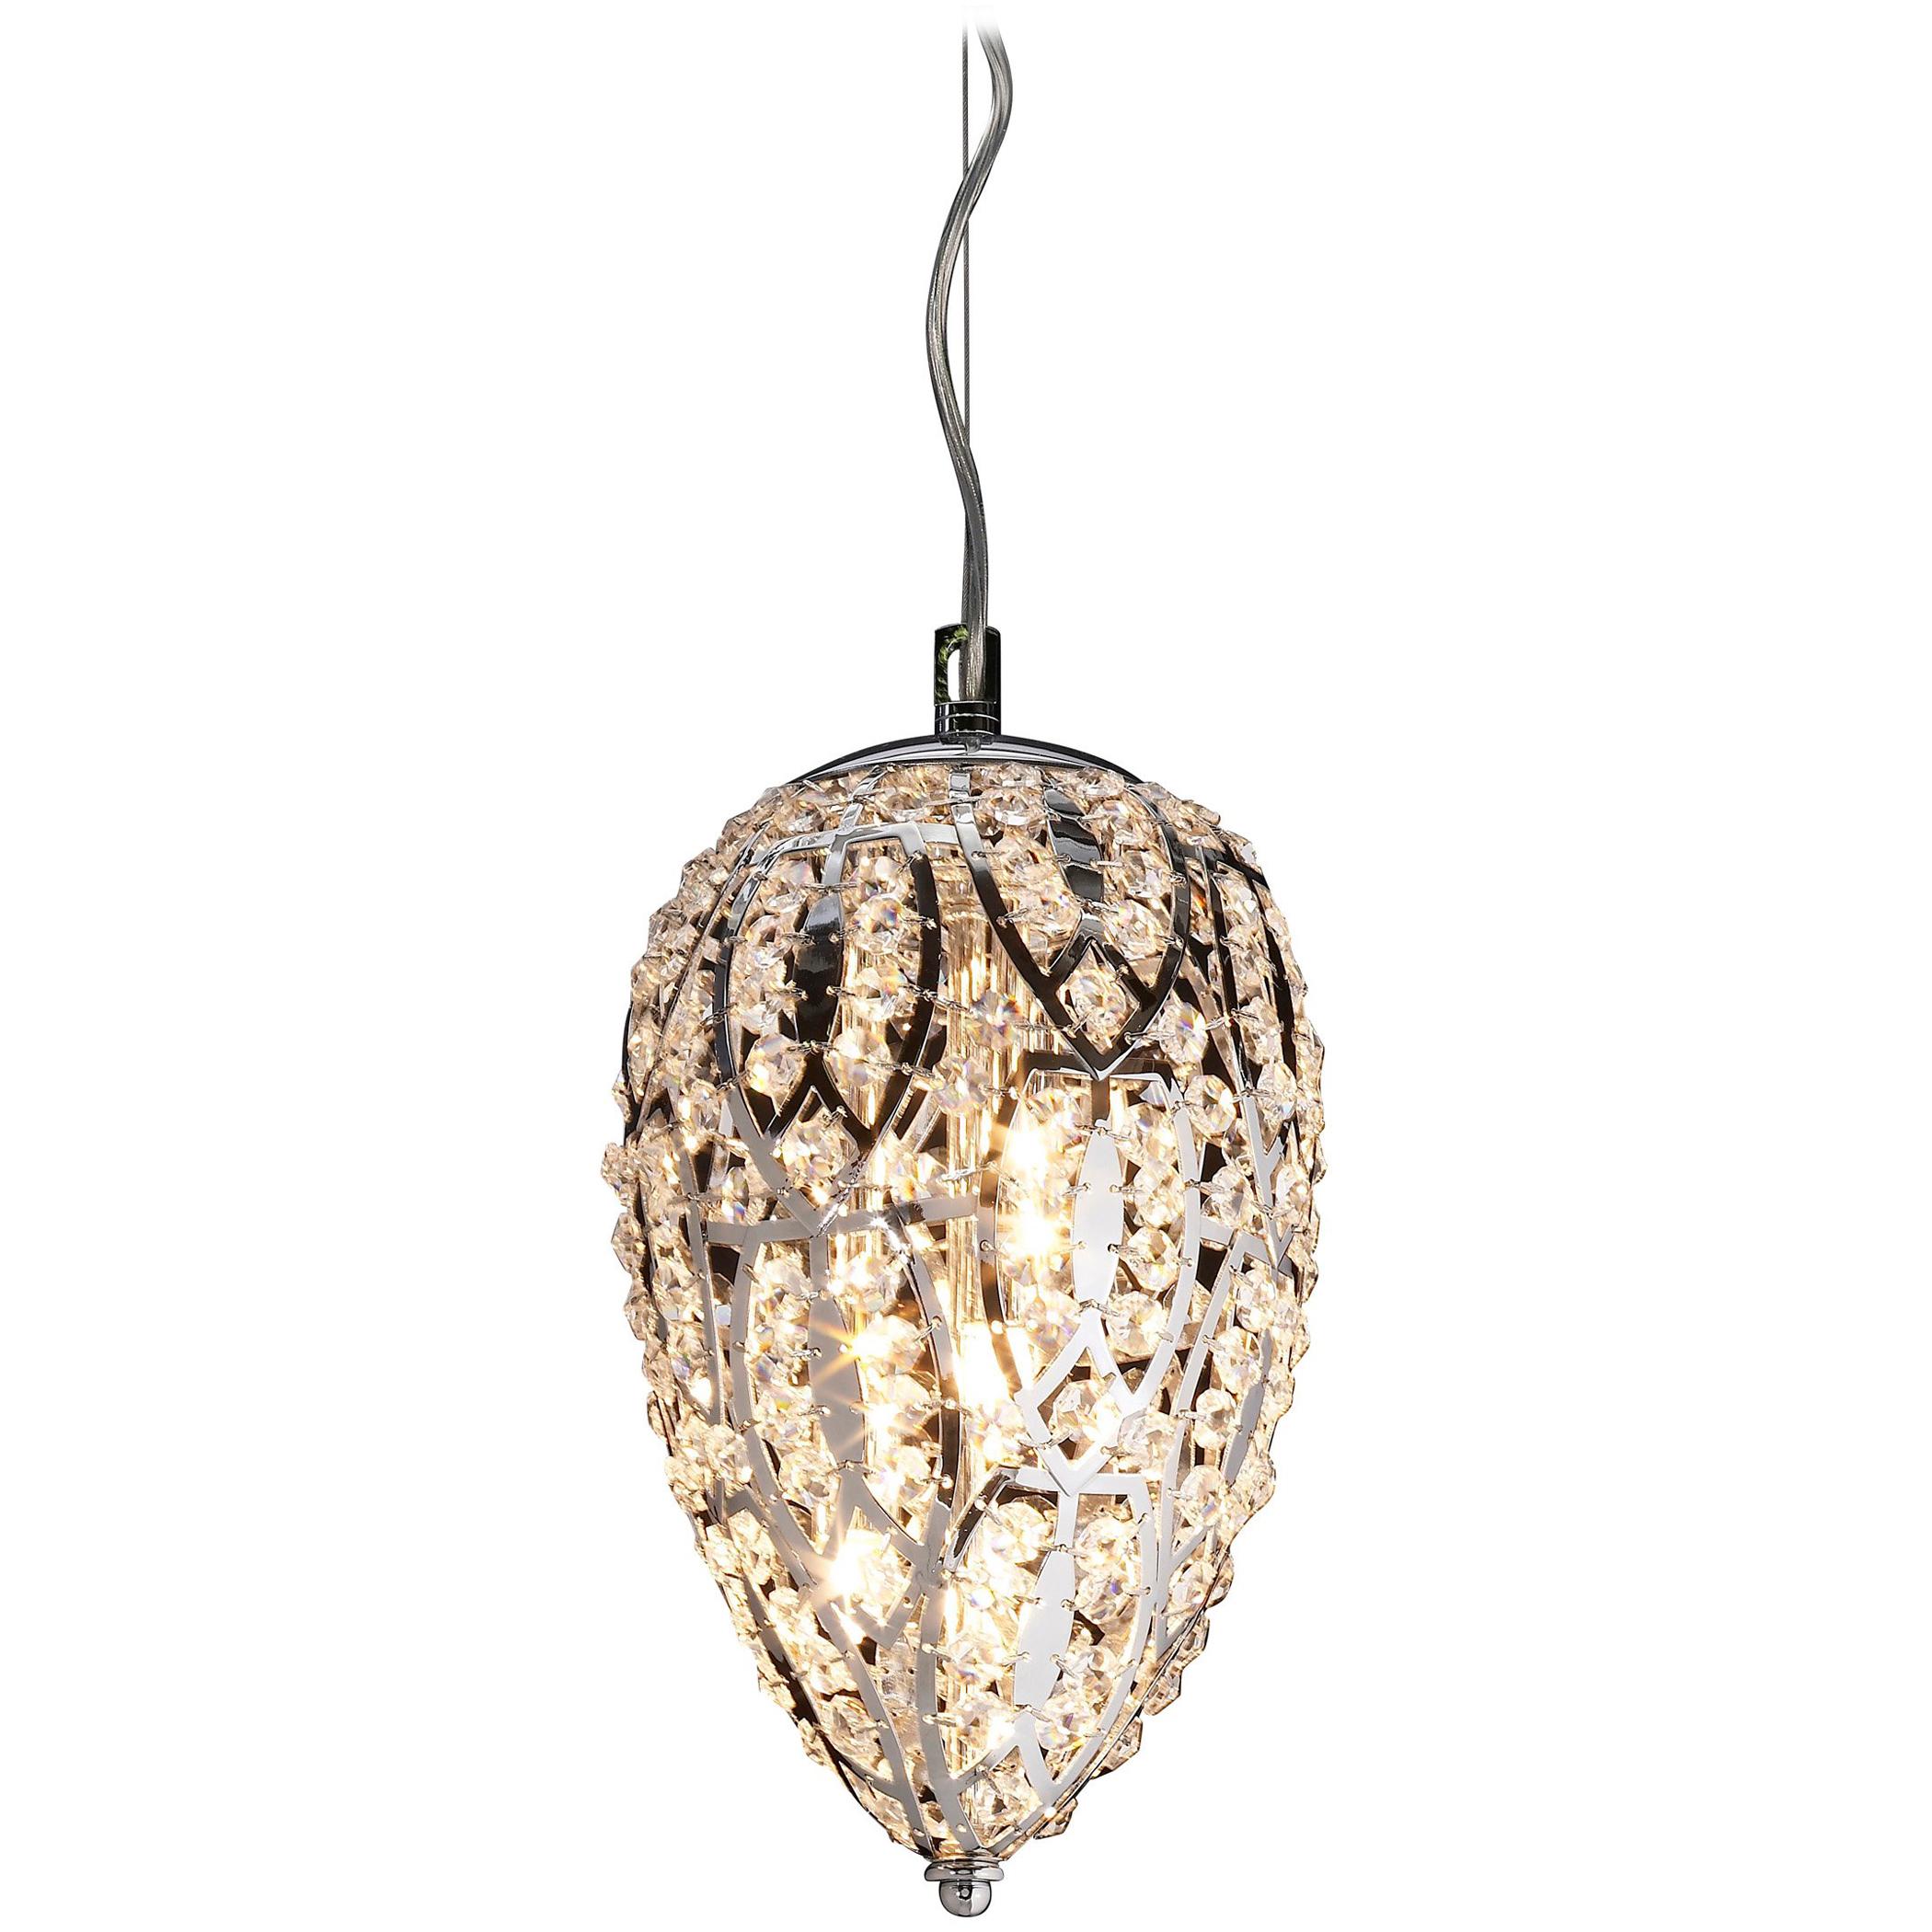 Egg Small Pendant Lamp, Chrome Finish, Arabesque Style, Italy